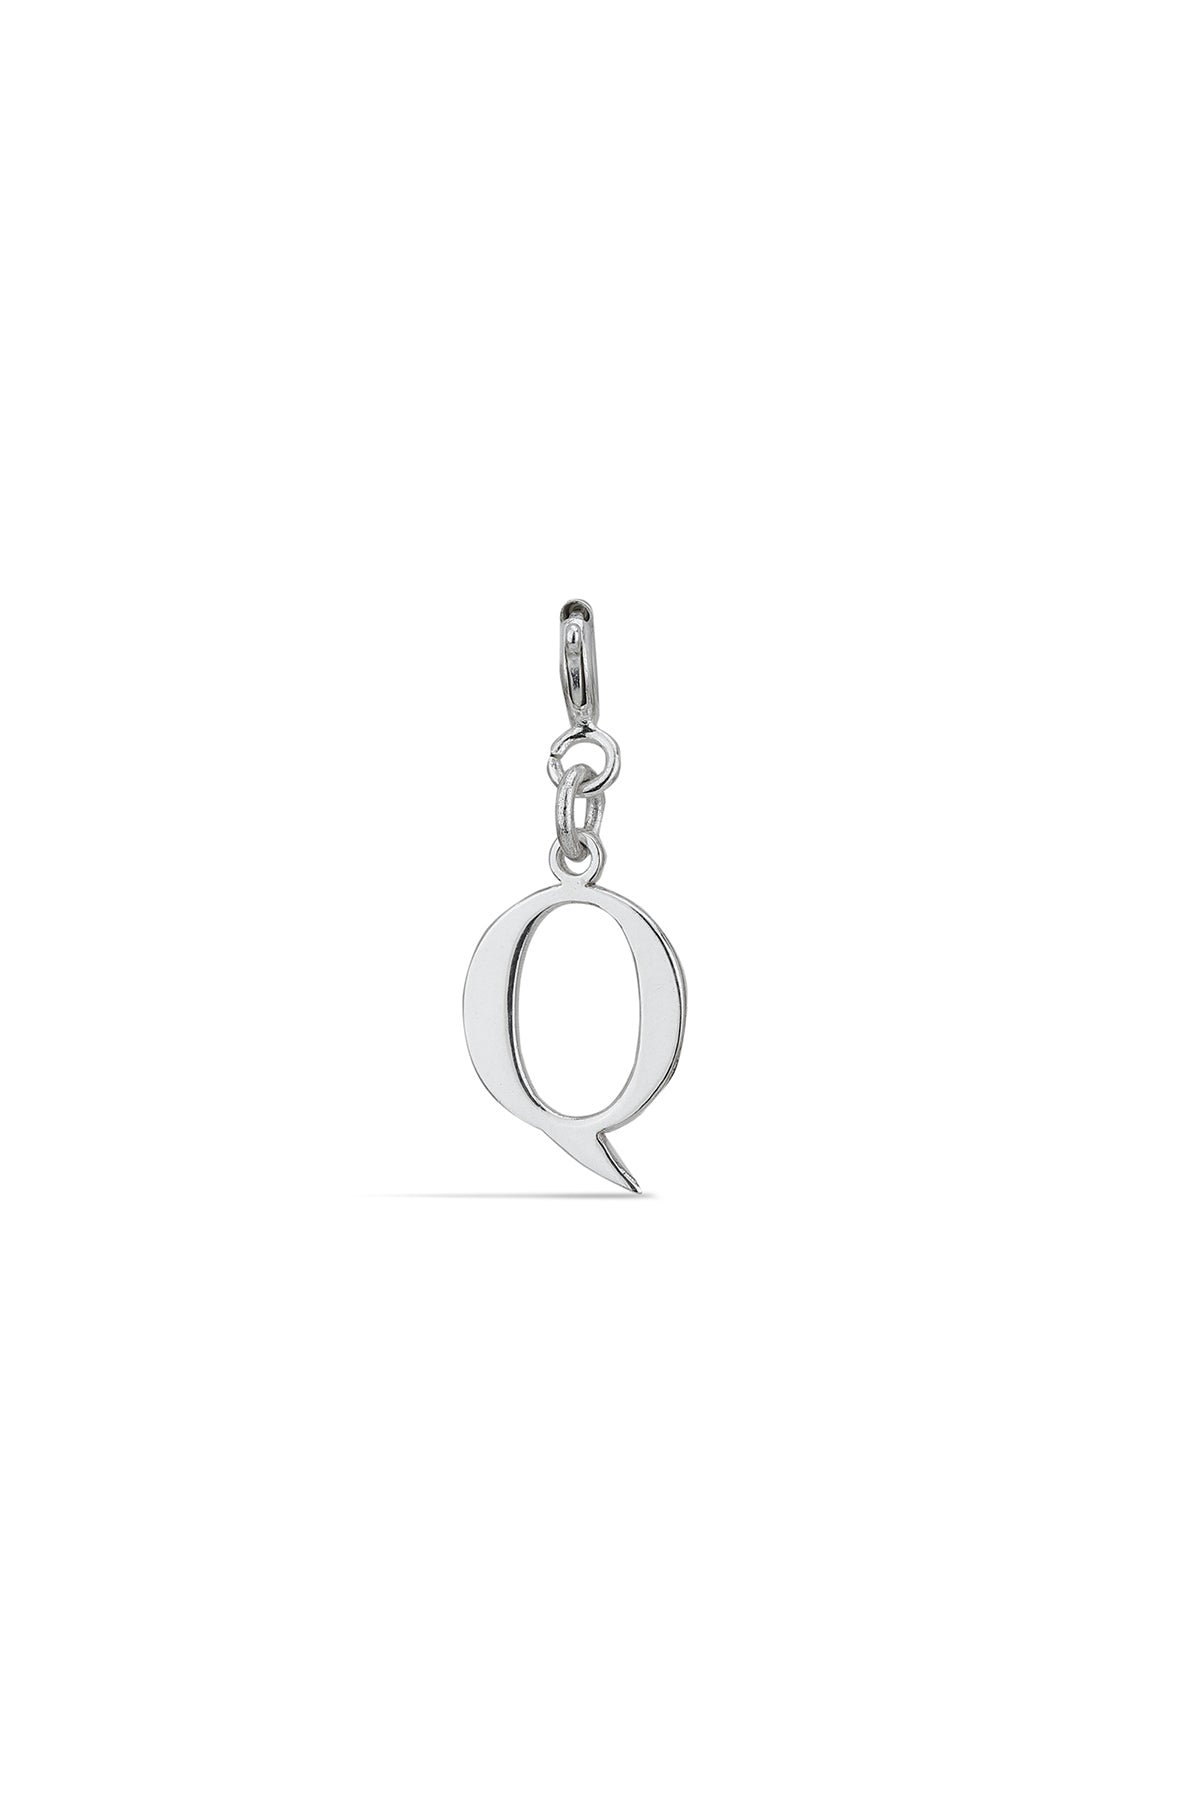 AN-PR-0QS - Silver Alphabet Q